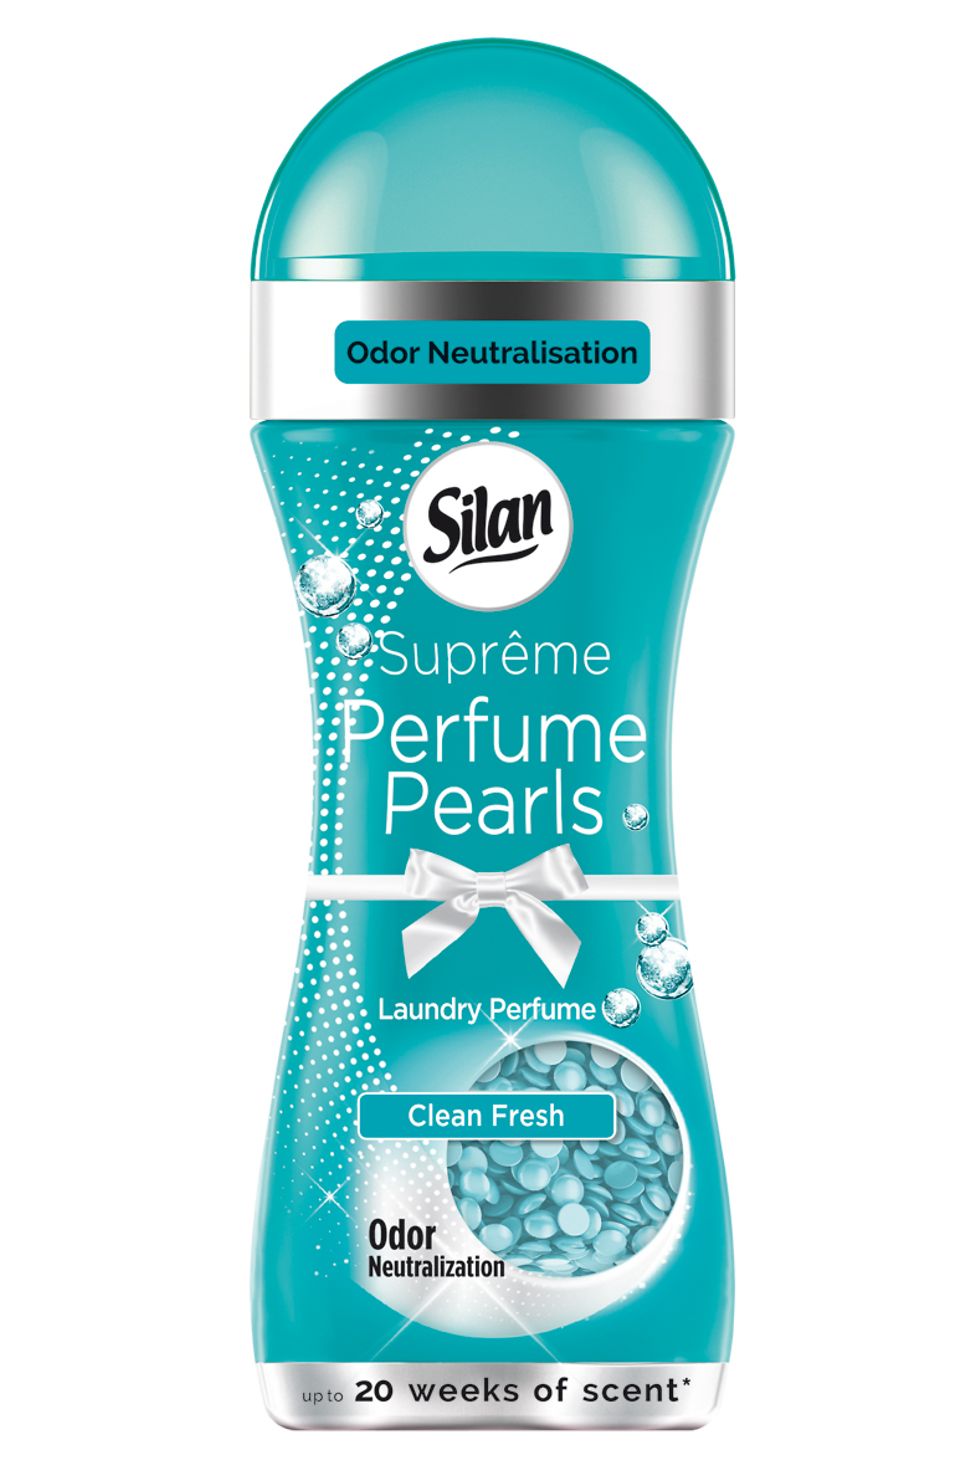 Silan Suprême Perfume Pearls ODOR NEUTRALIZATION